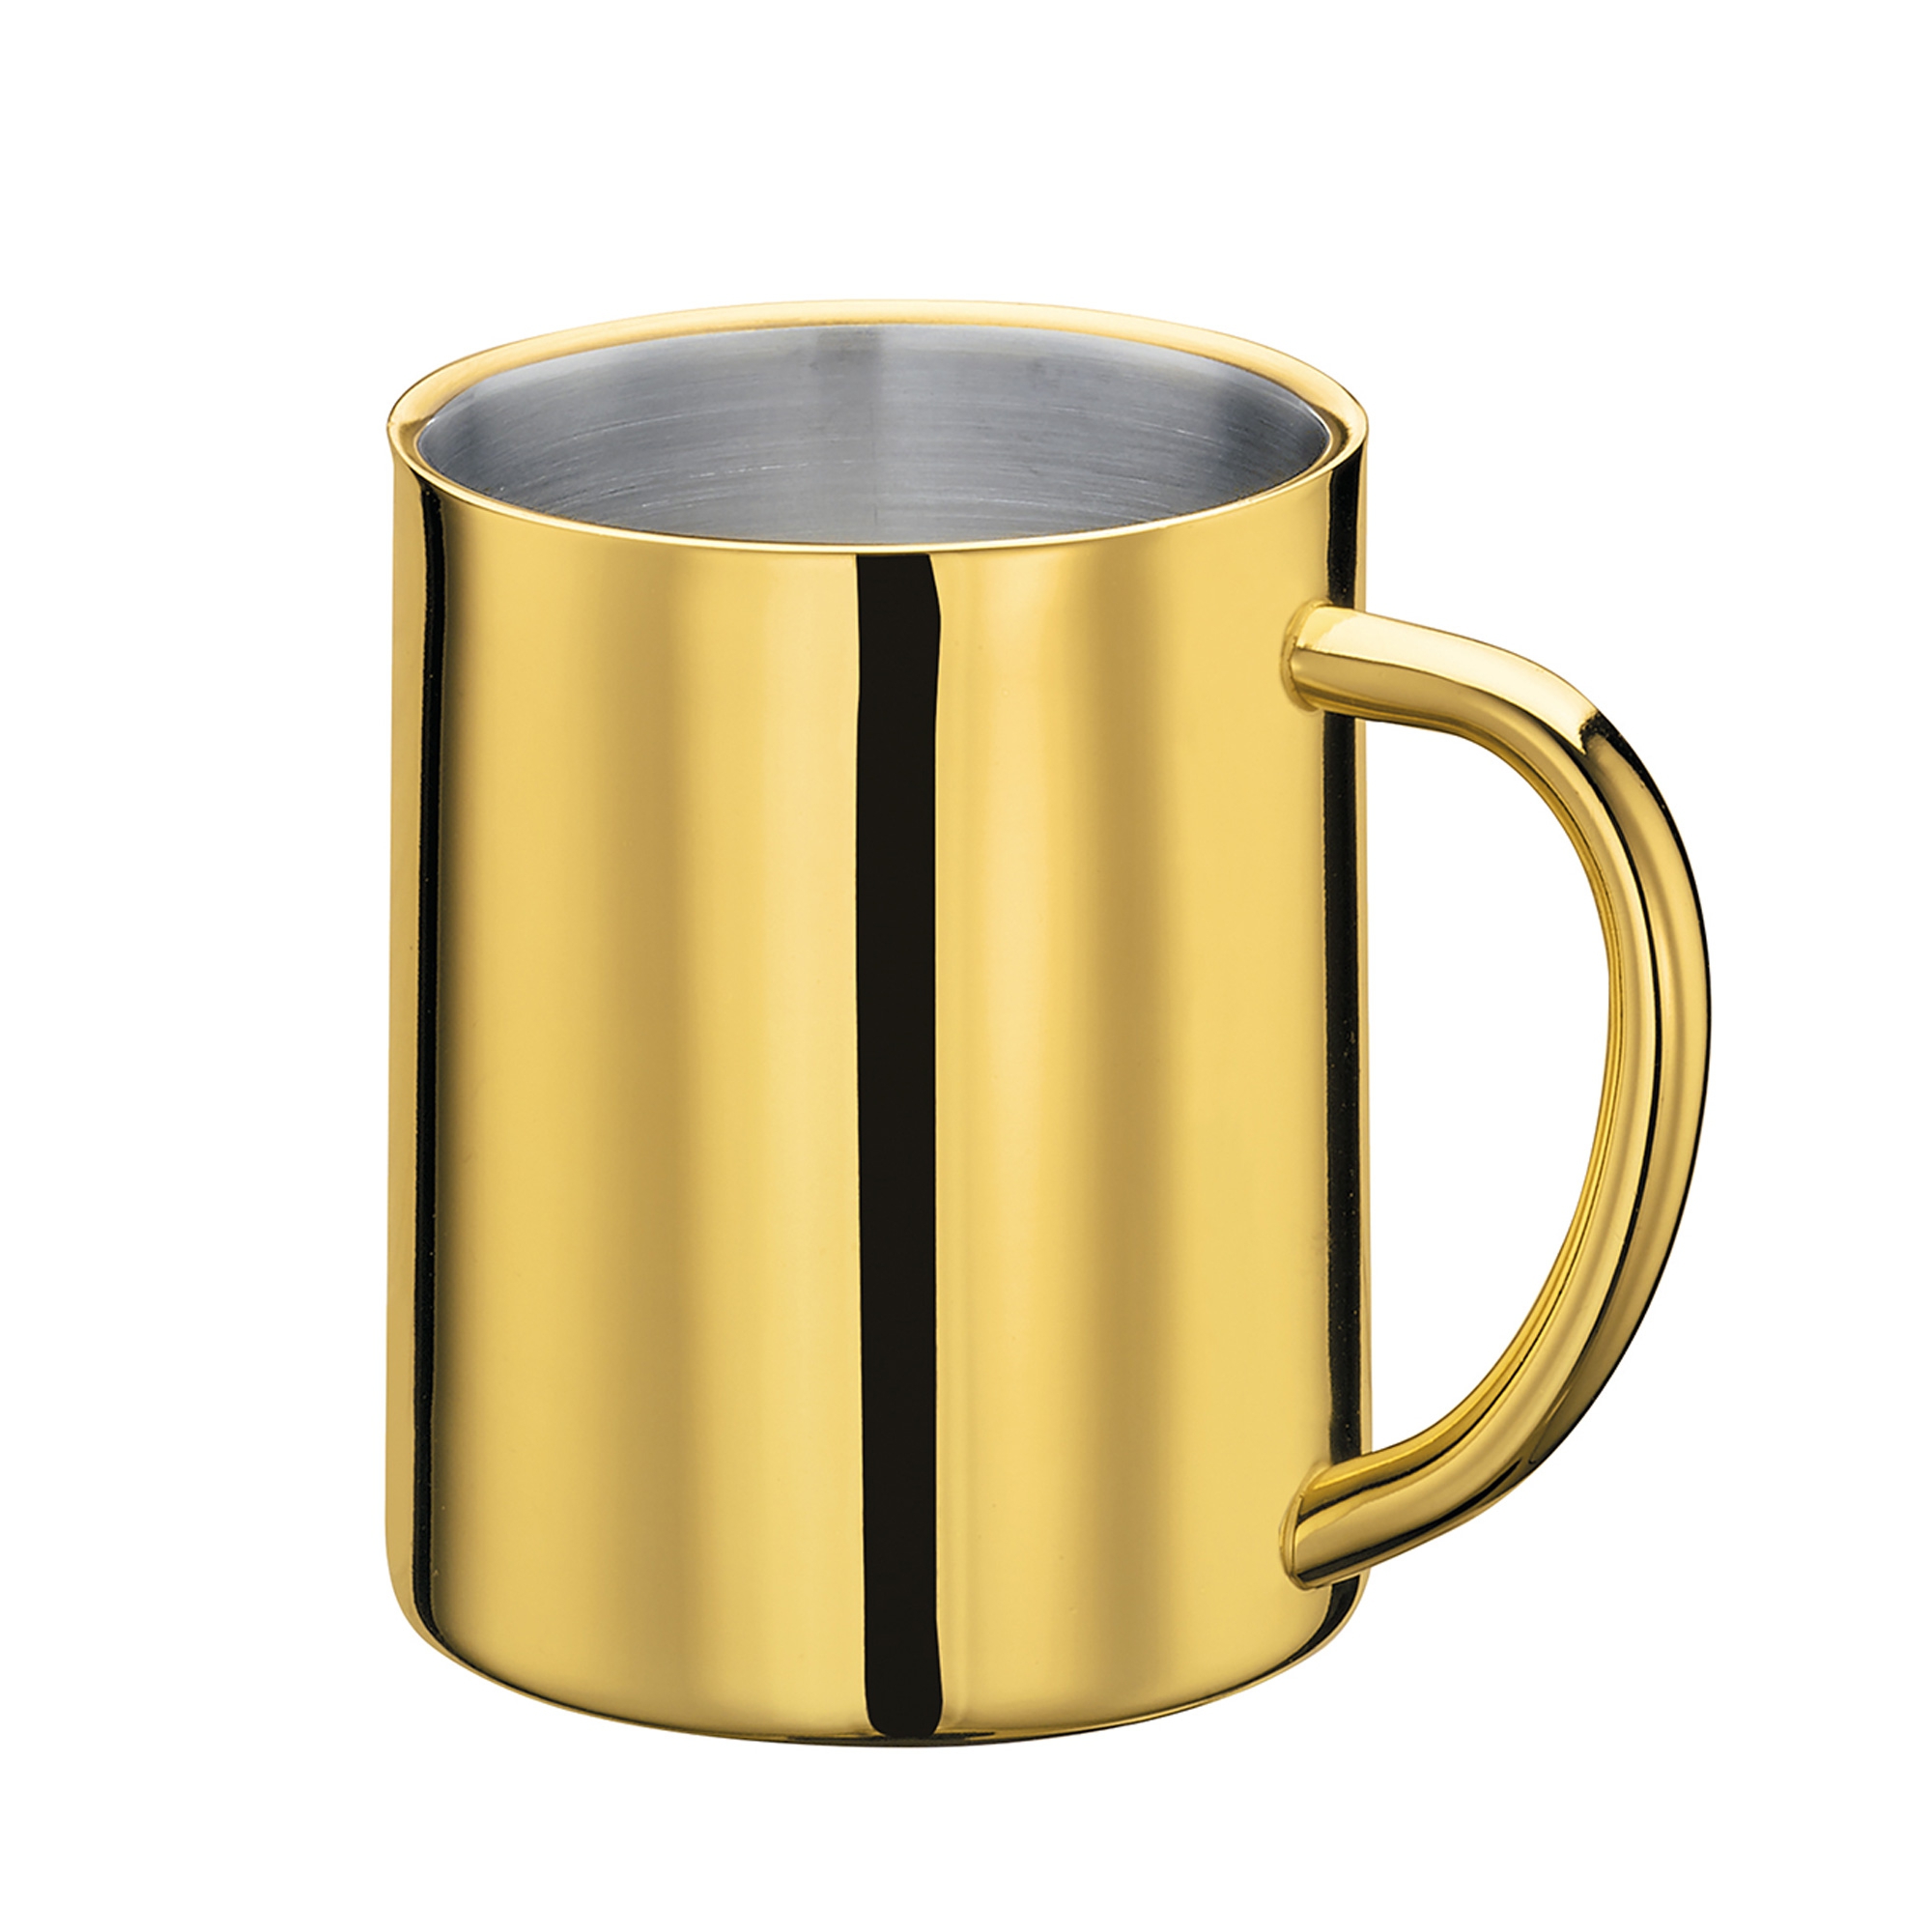 Cilio - Coffee mug - STEEL ORO - 225 ml